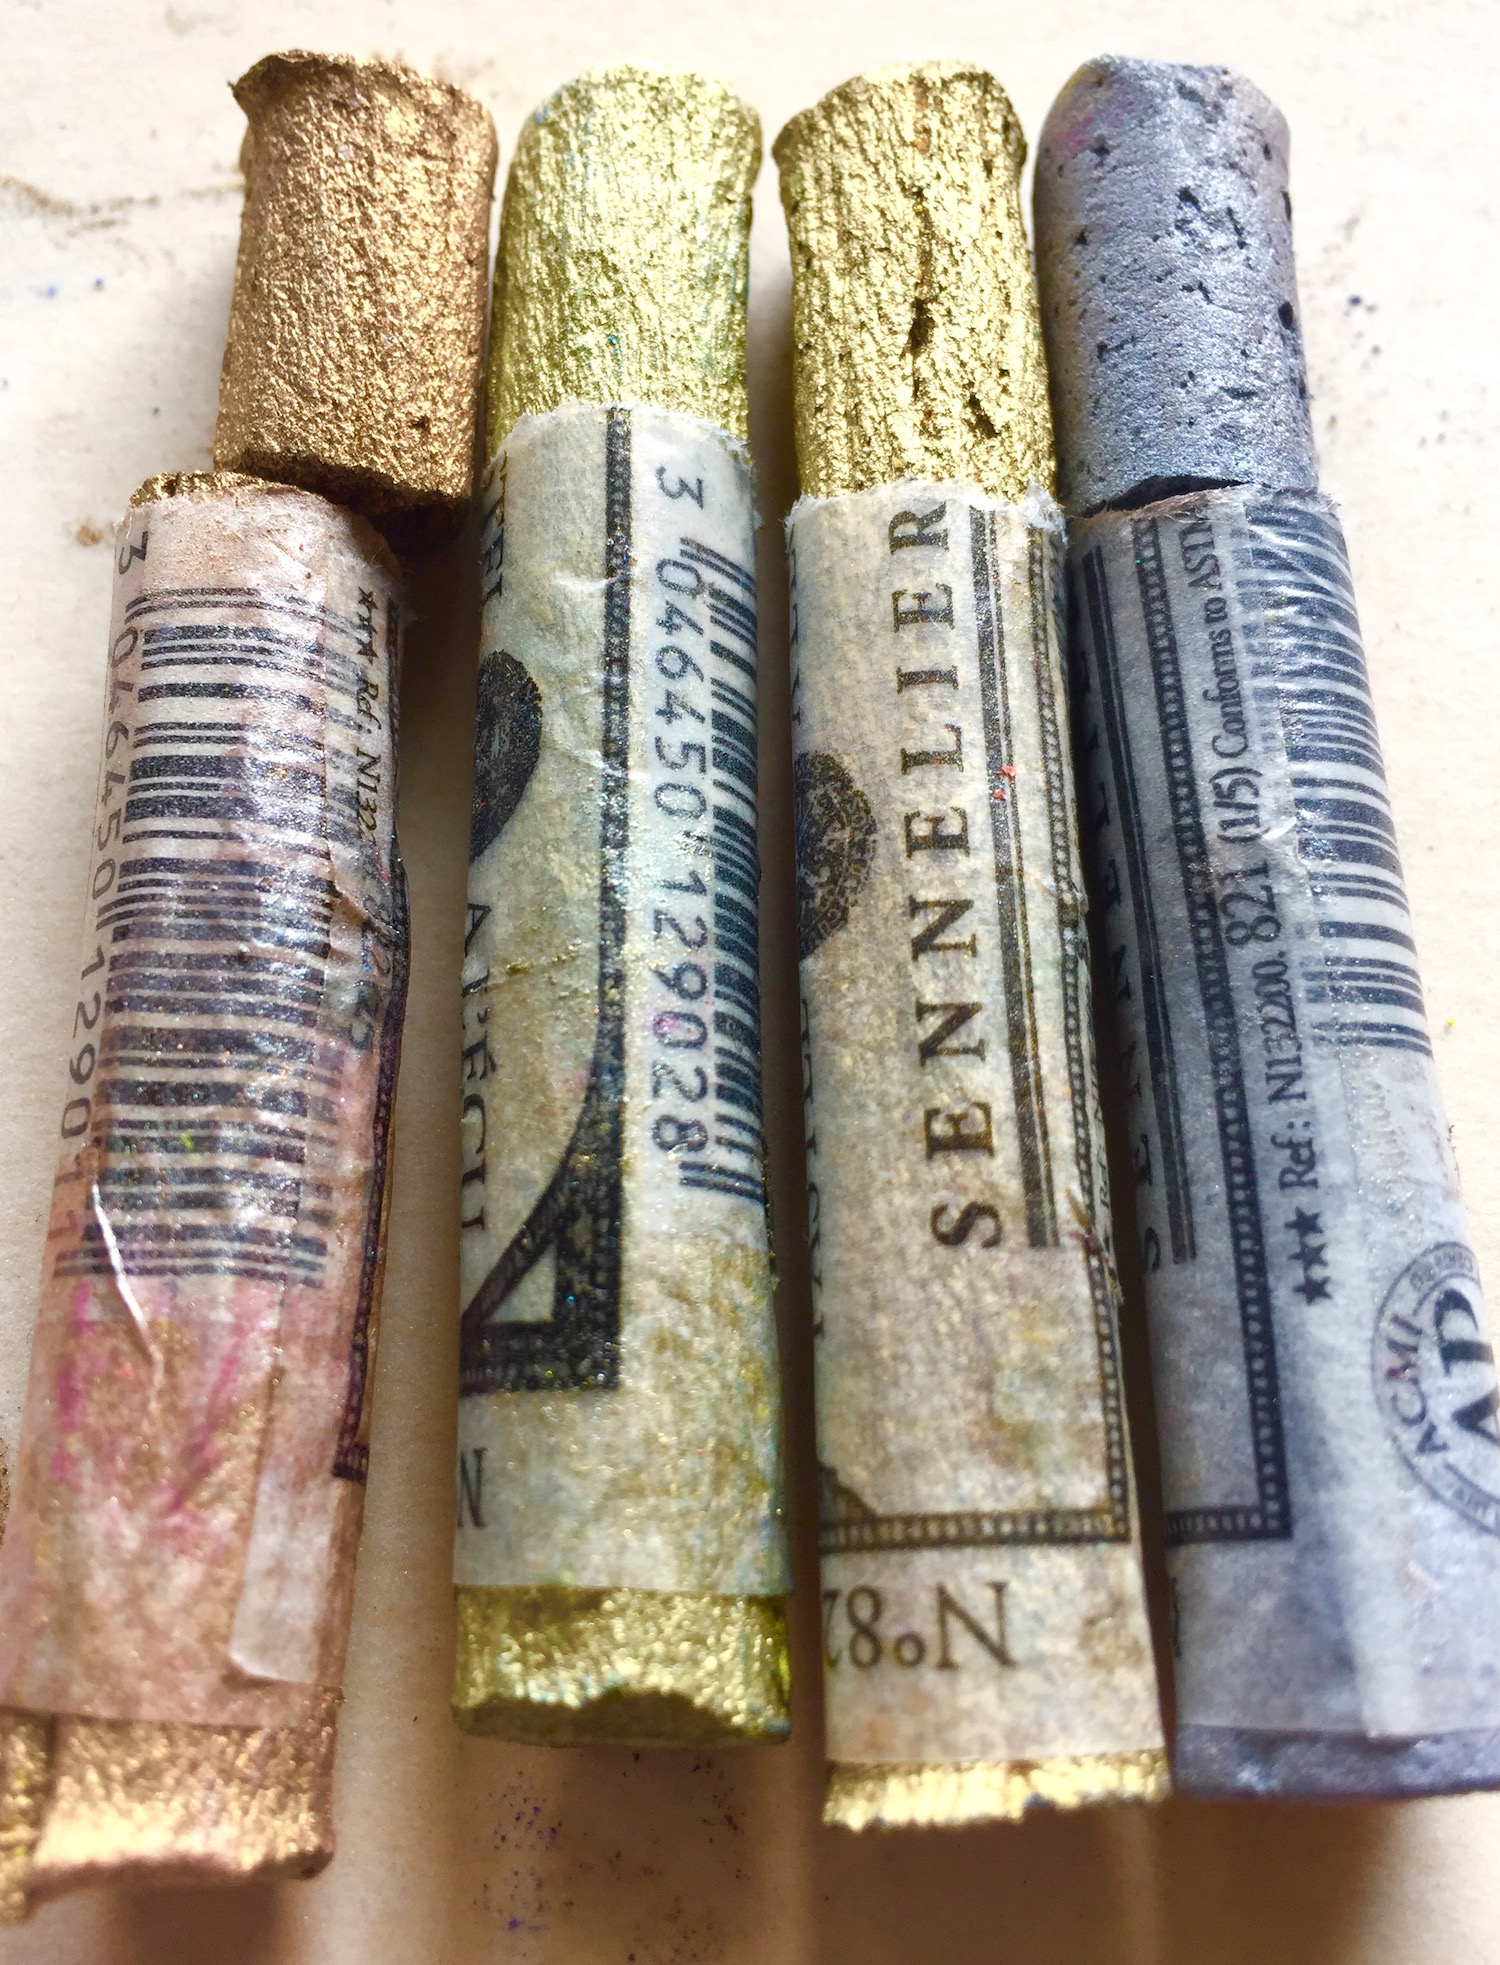 Metallic sticks from Sennelier's iridescent pastels set